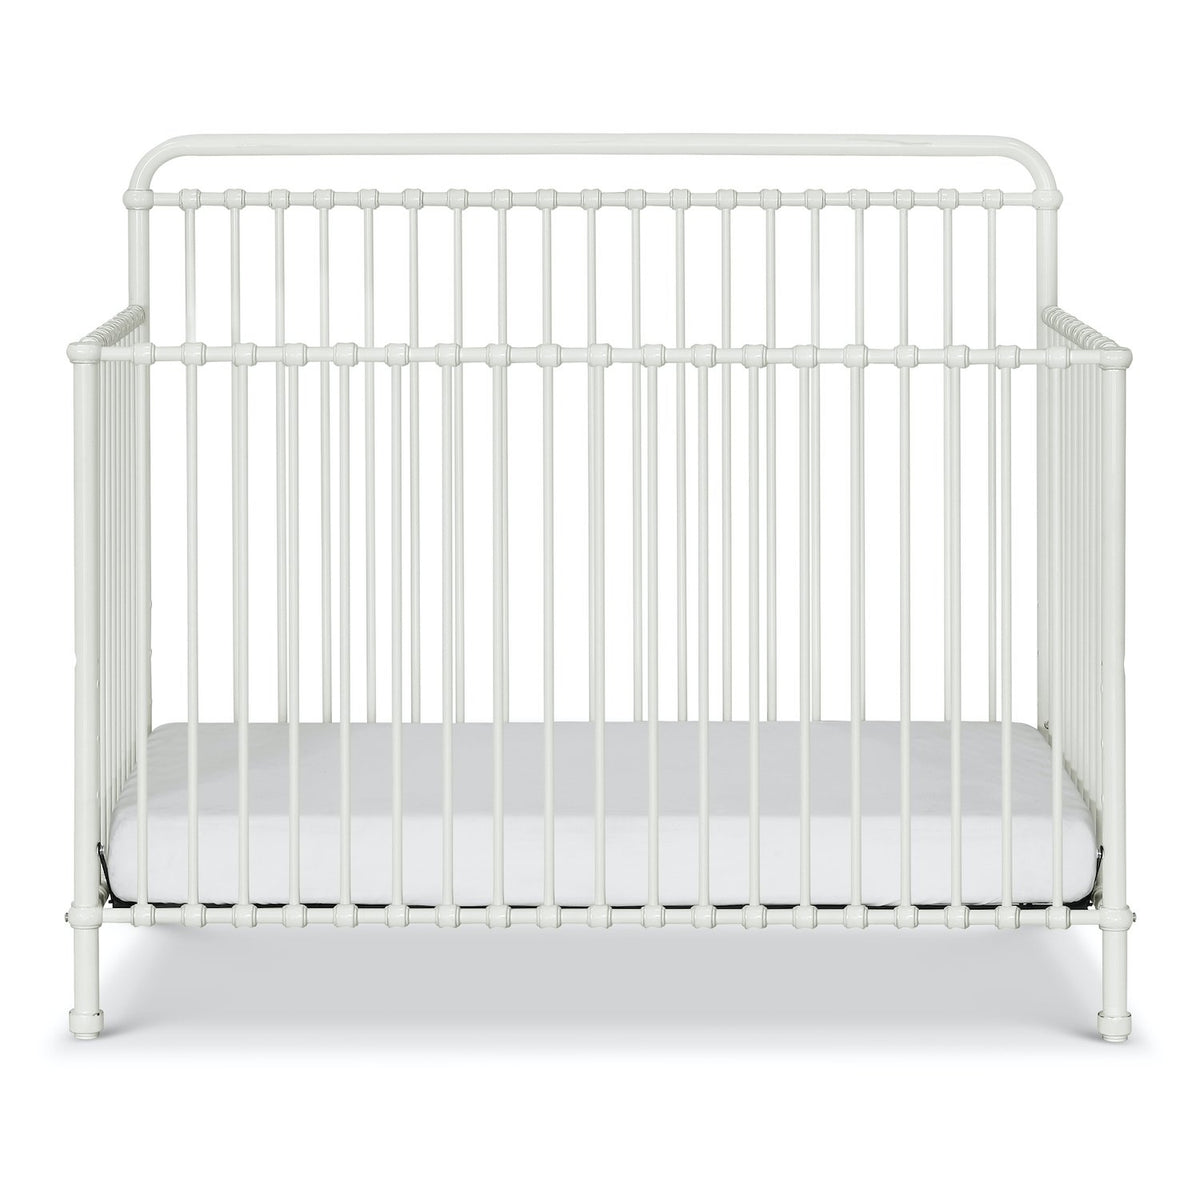 Winston 4-in-1 Convertible Crib - Project Nursery